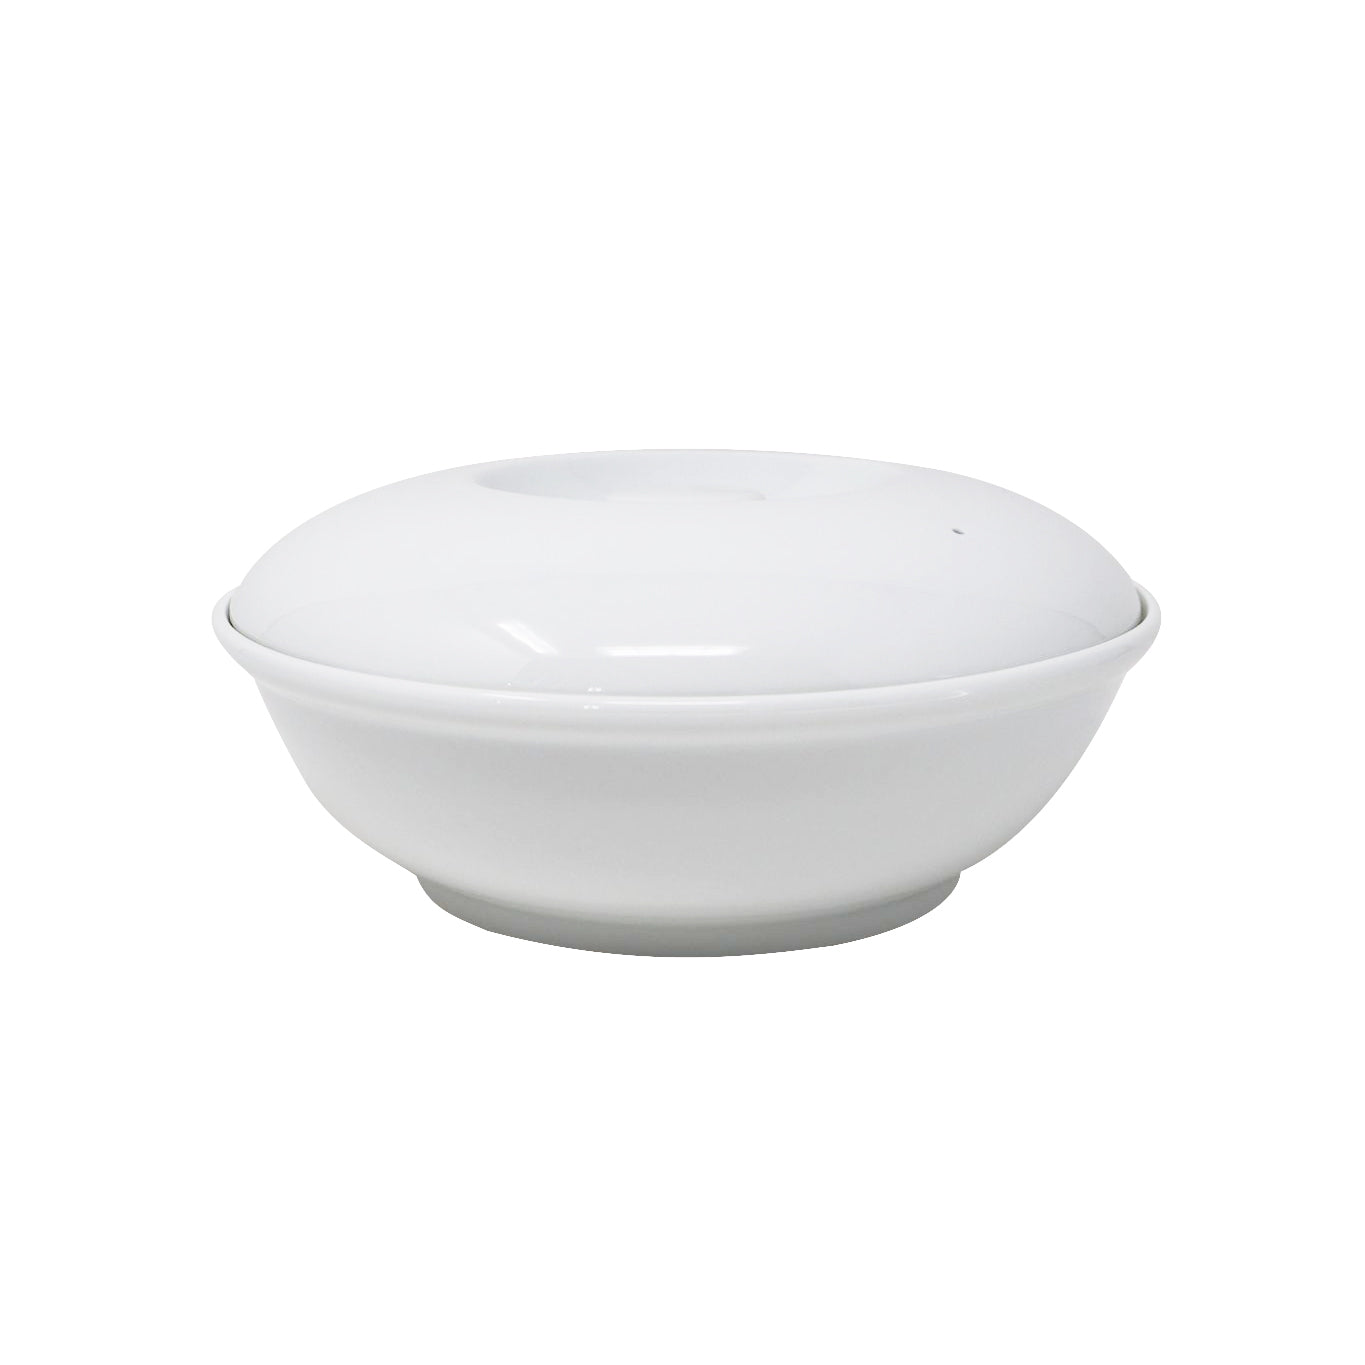 Noritake Lifestyle White Covered Serving Bowl 1.45L